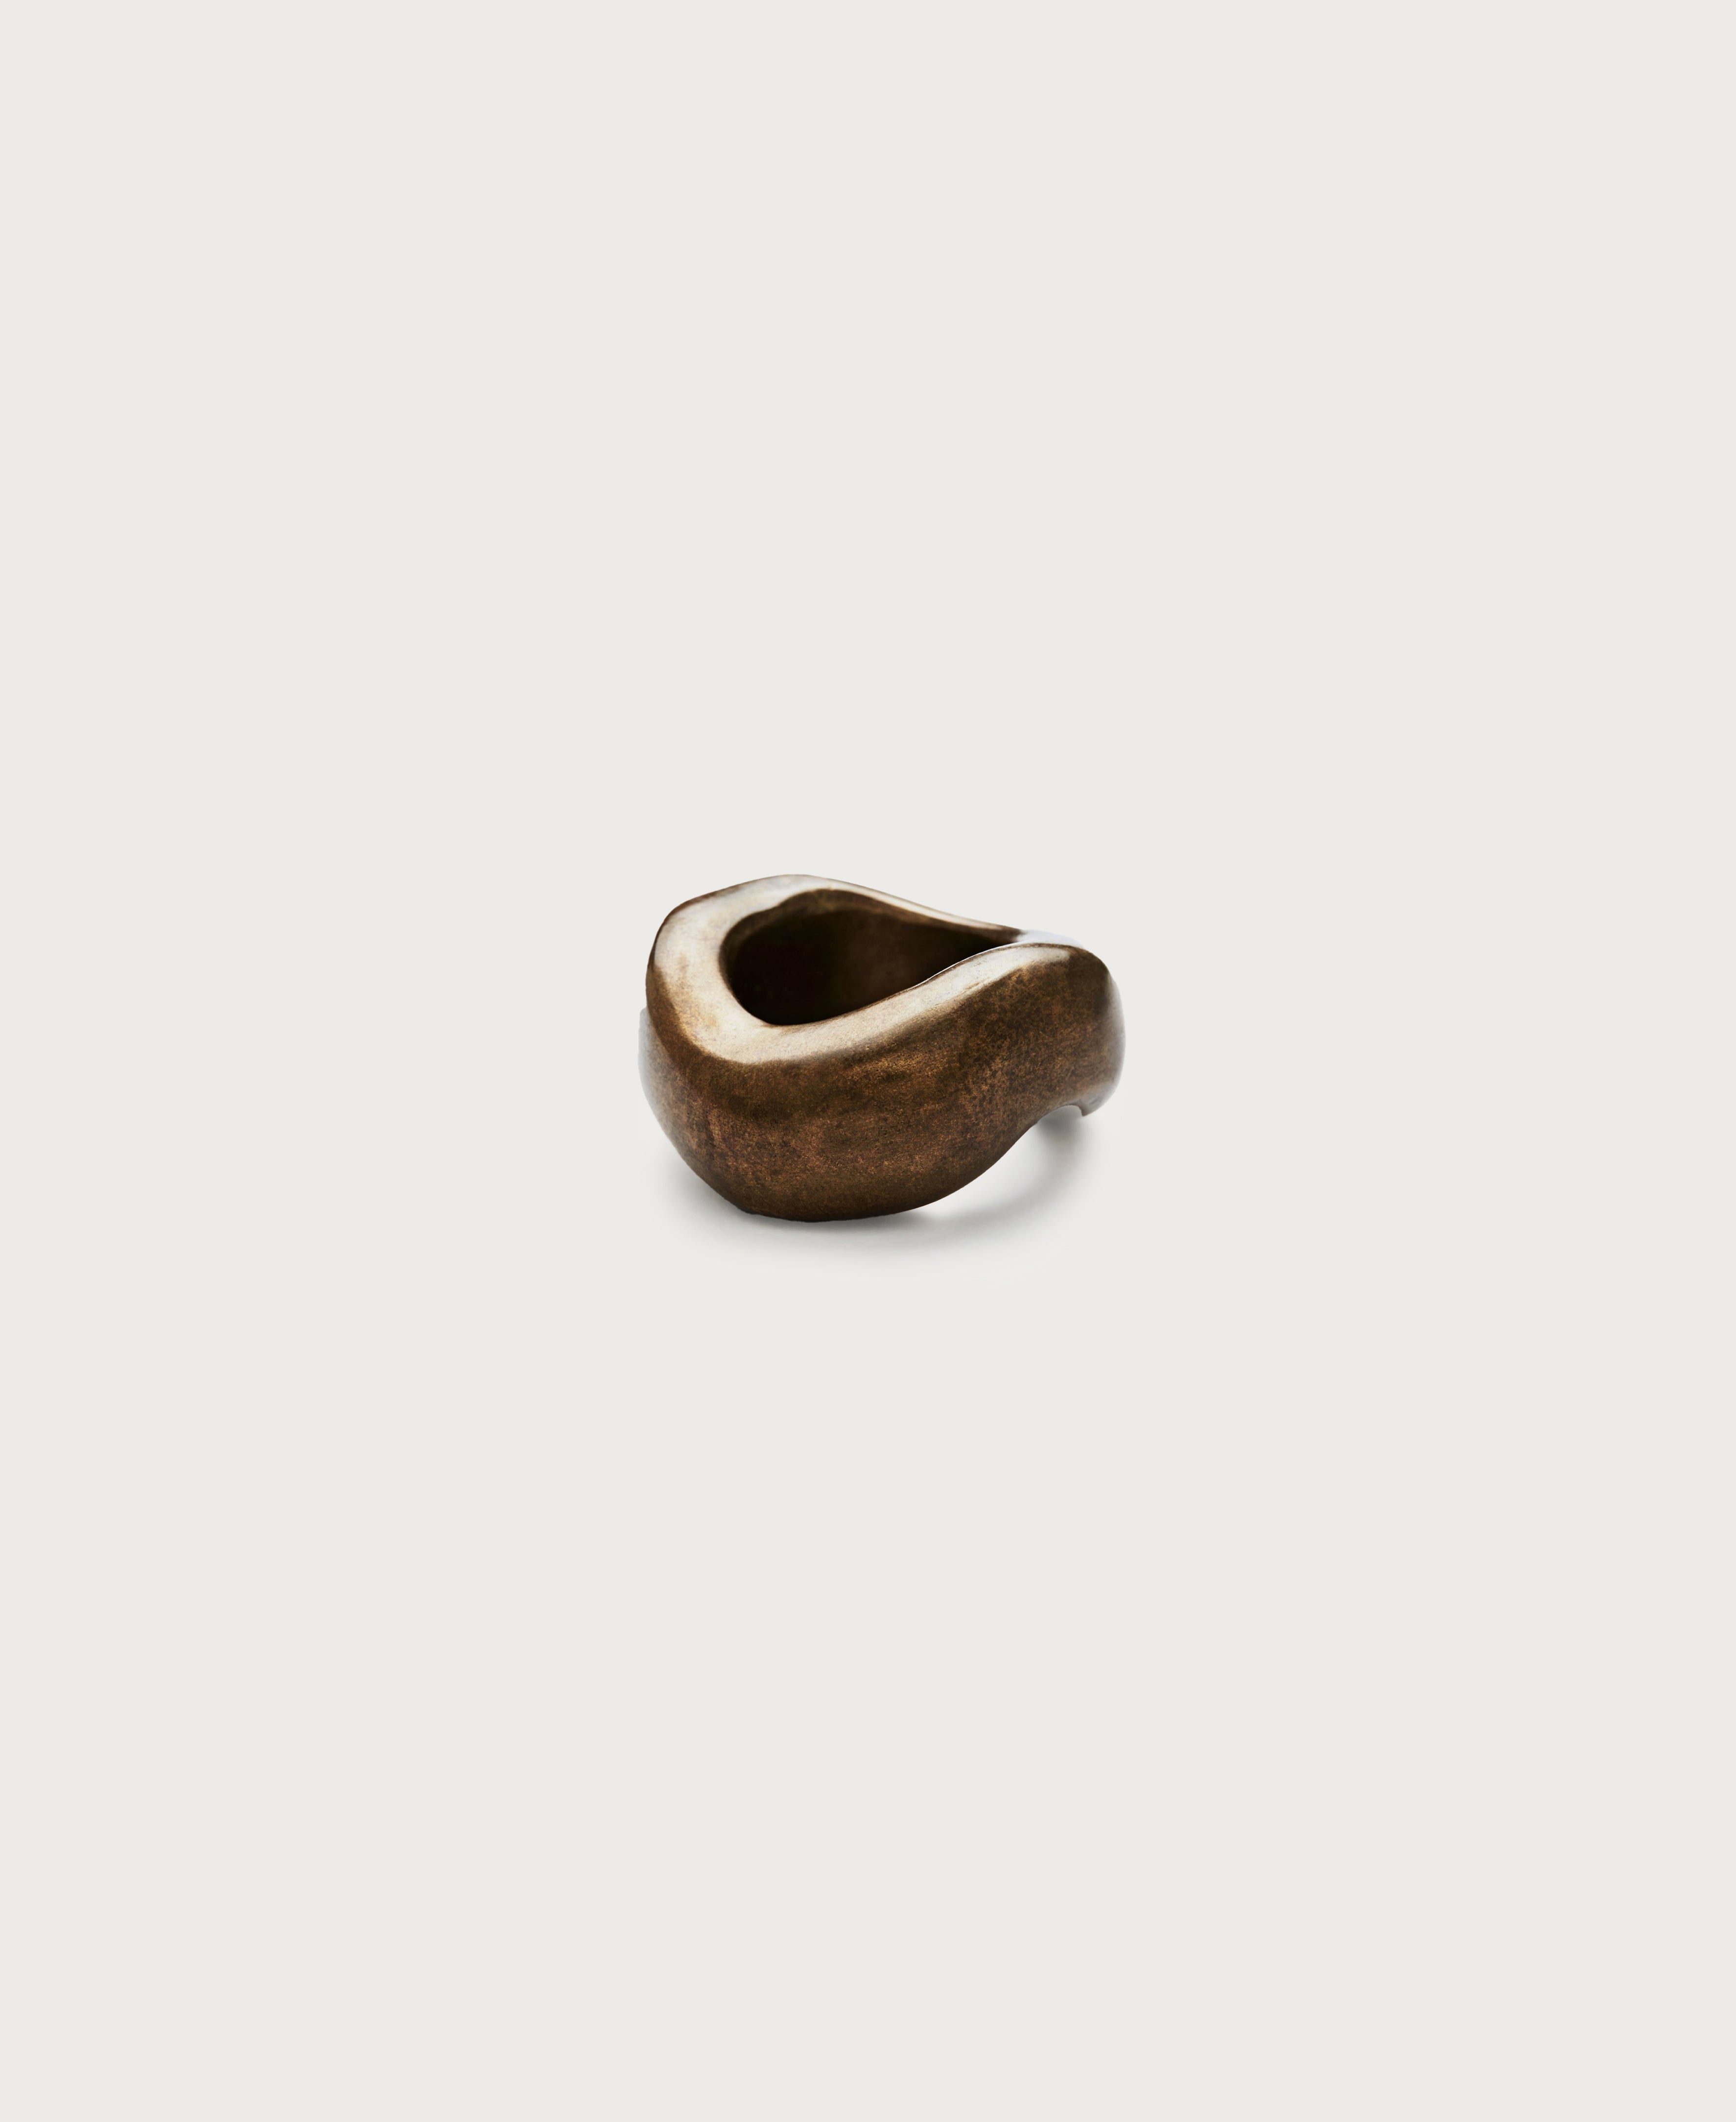   Bronze 'Wavy' Napkin Ring - Set of 4  